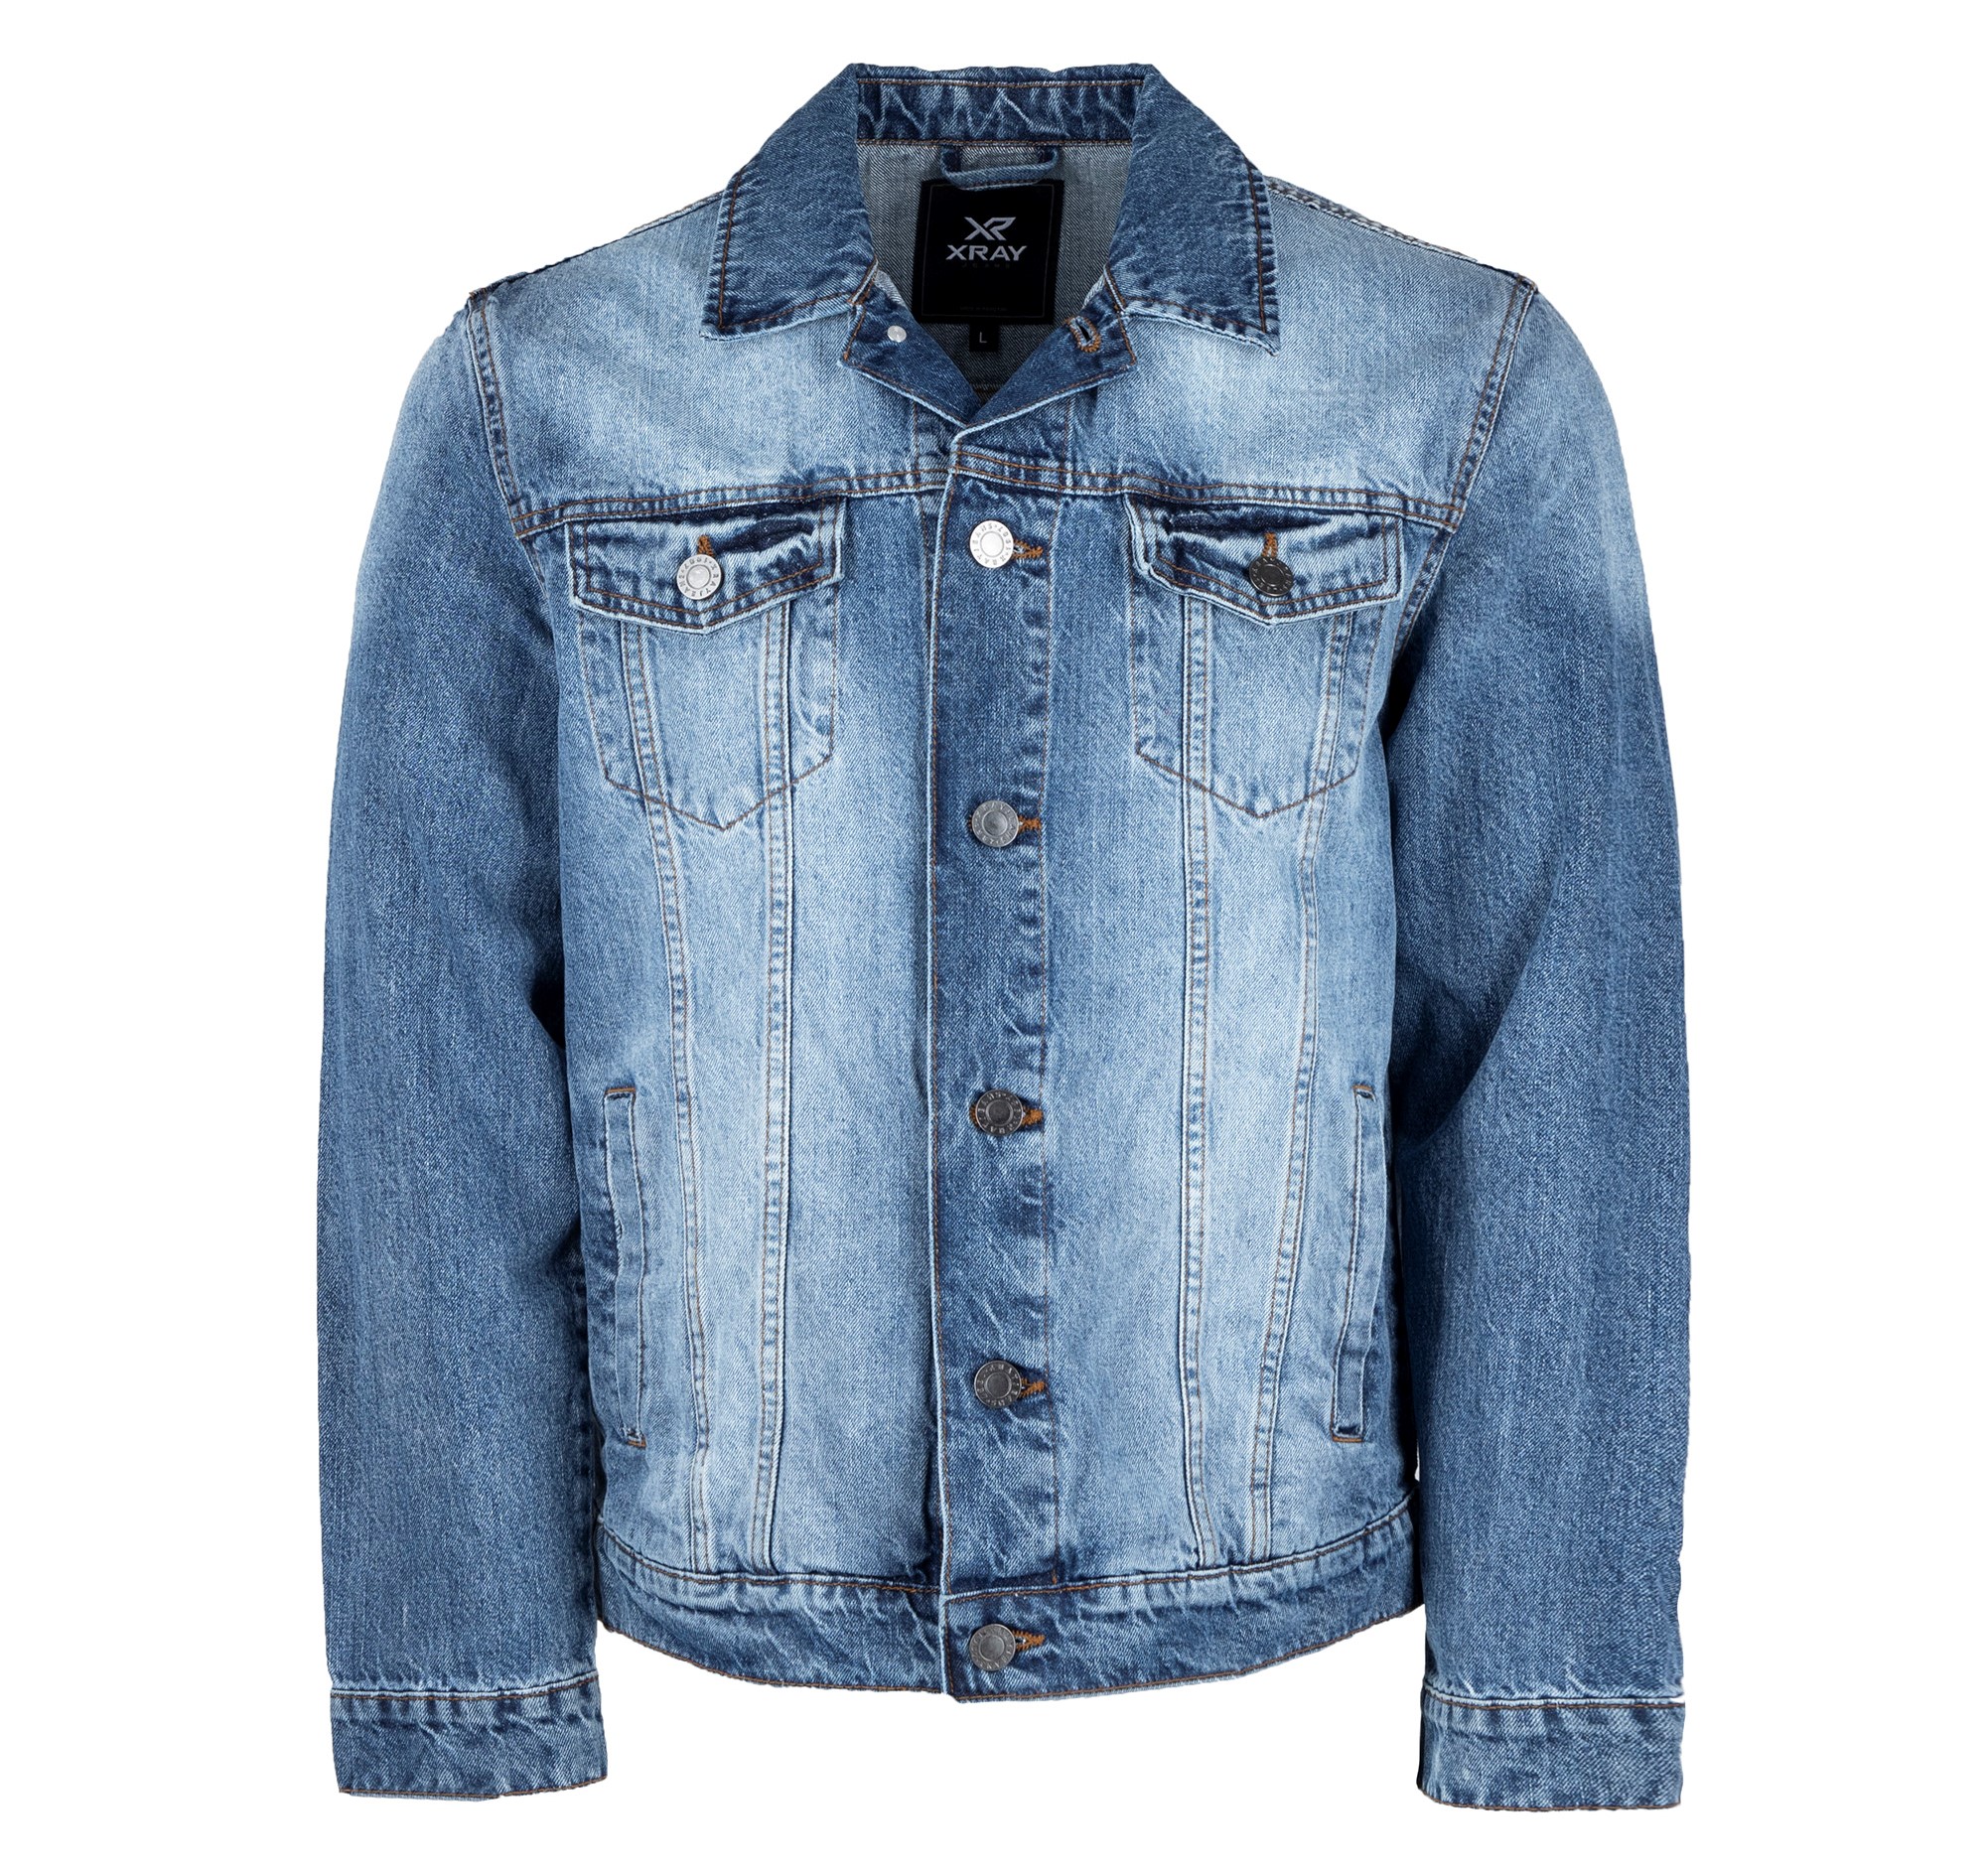 X RAY Men's Denim Jacket, Washed Ripped Distressed Flex Stretch Casual Trucker Biker Jean Jacket, Medium Blue, Large - image 4 of 9